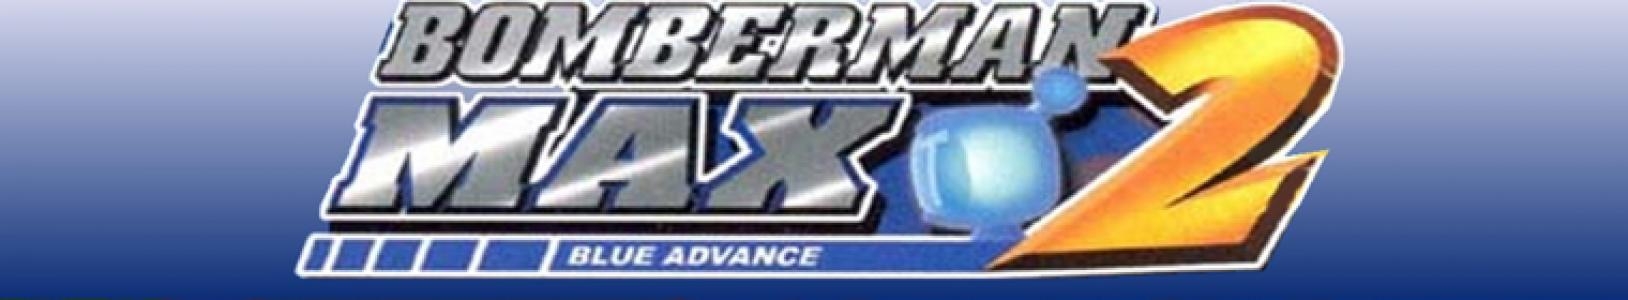 Bomberman Max 2: Blue Advance banner